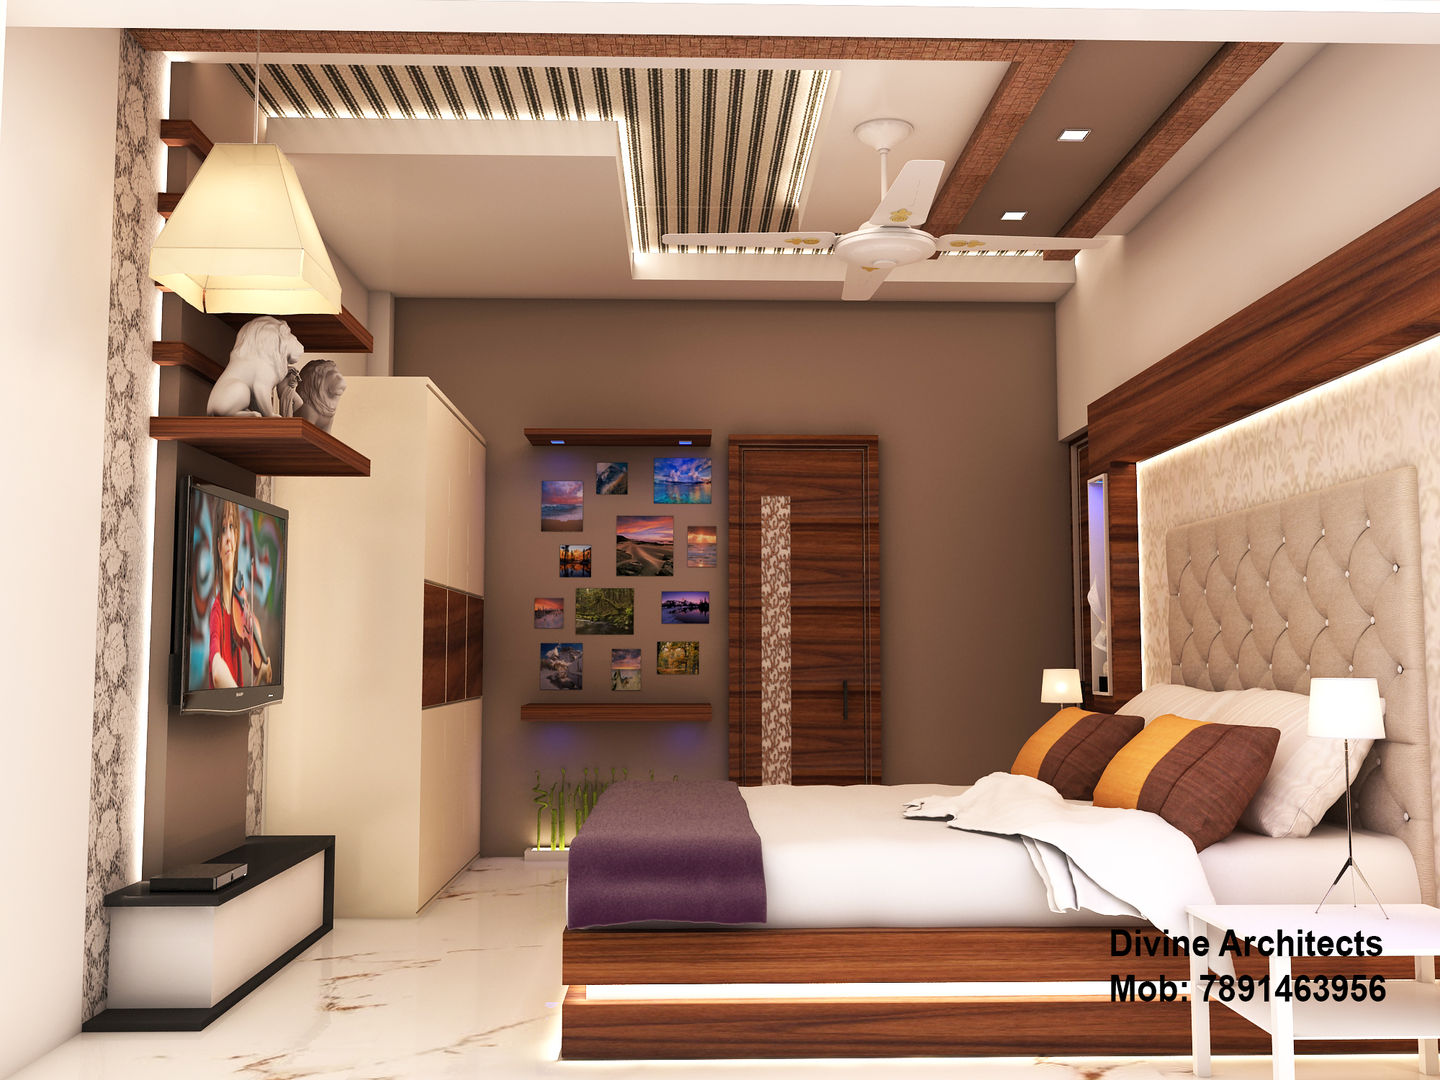 Son_ s bed room interior design for mr. Ramavtar Khunteta jalmahal site joraver Singh gate govind nagar east Jaipur, divine architects divine architects Habitaciones modernas